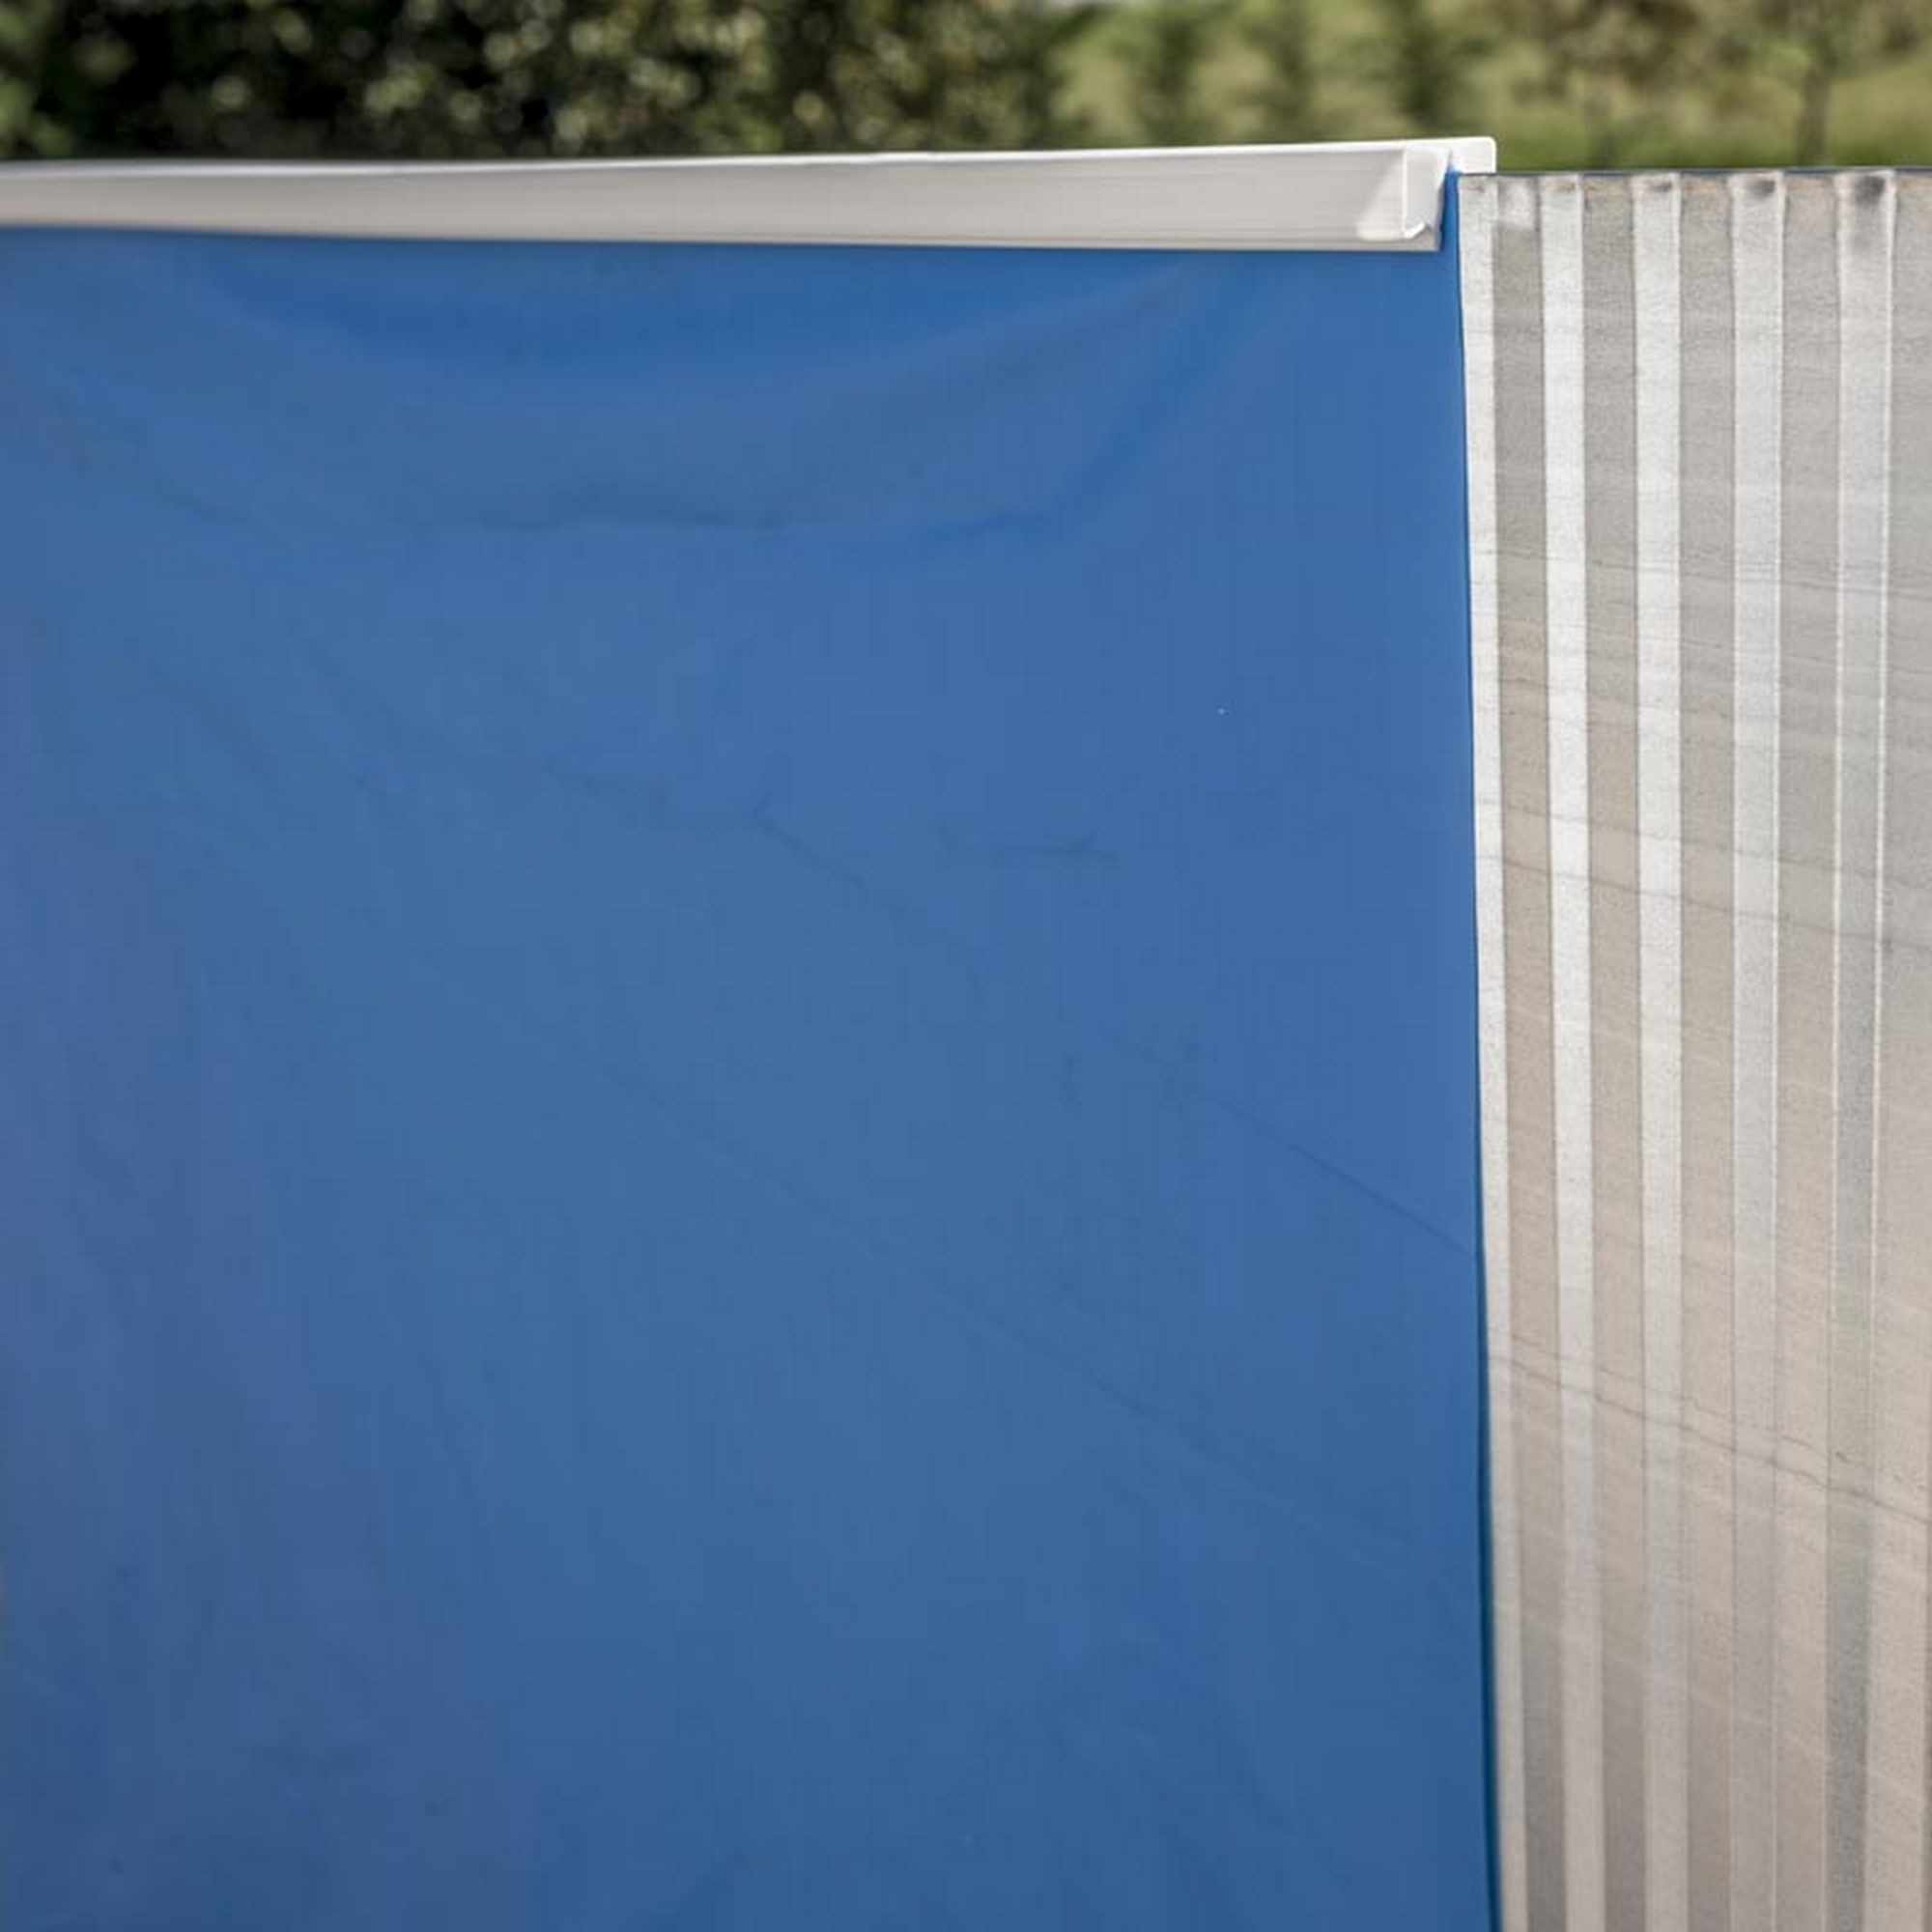 Einbaupool-Set 'Sumatra' blau/weiß oval 700 x 320 x 120 cm + product picture